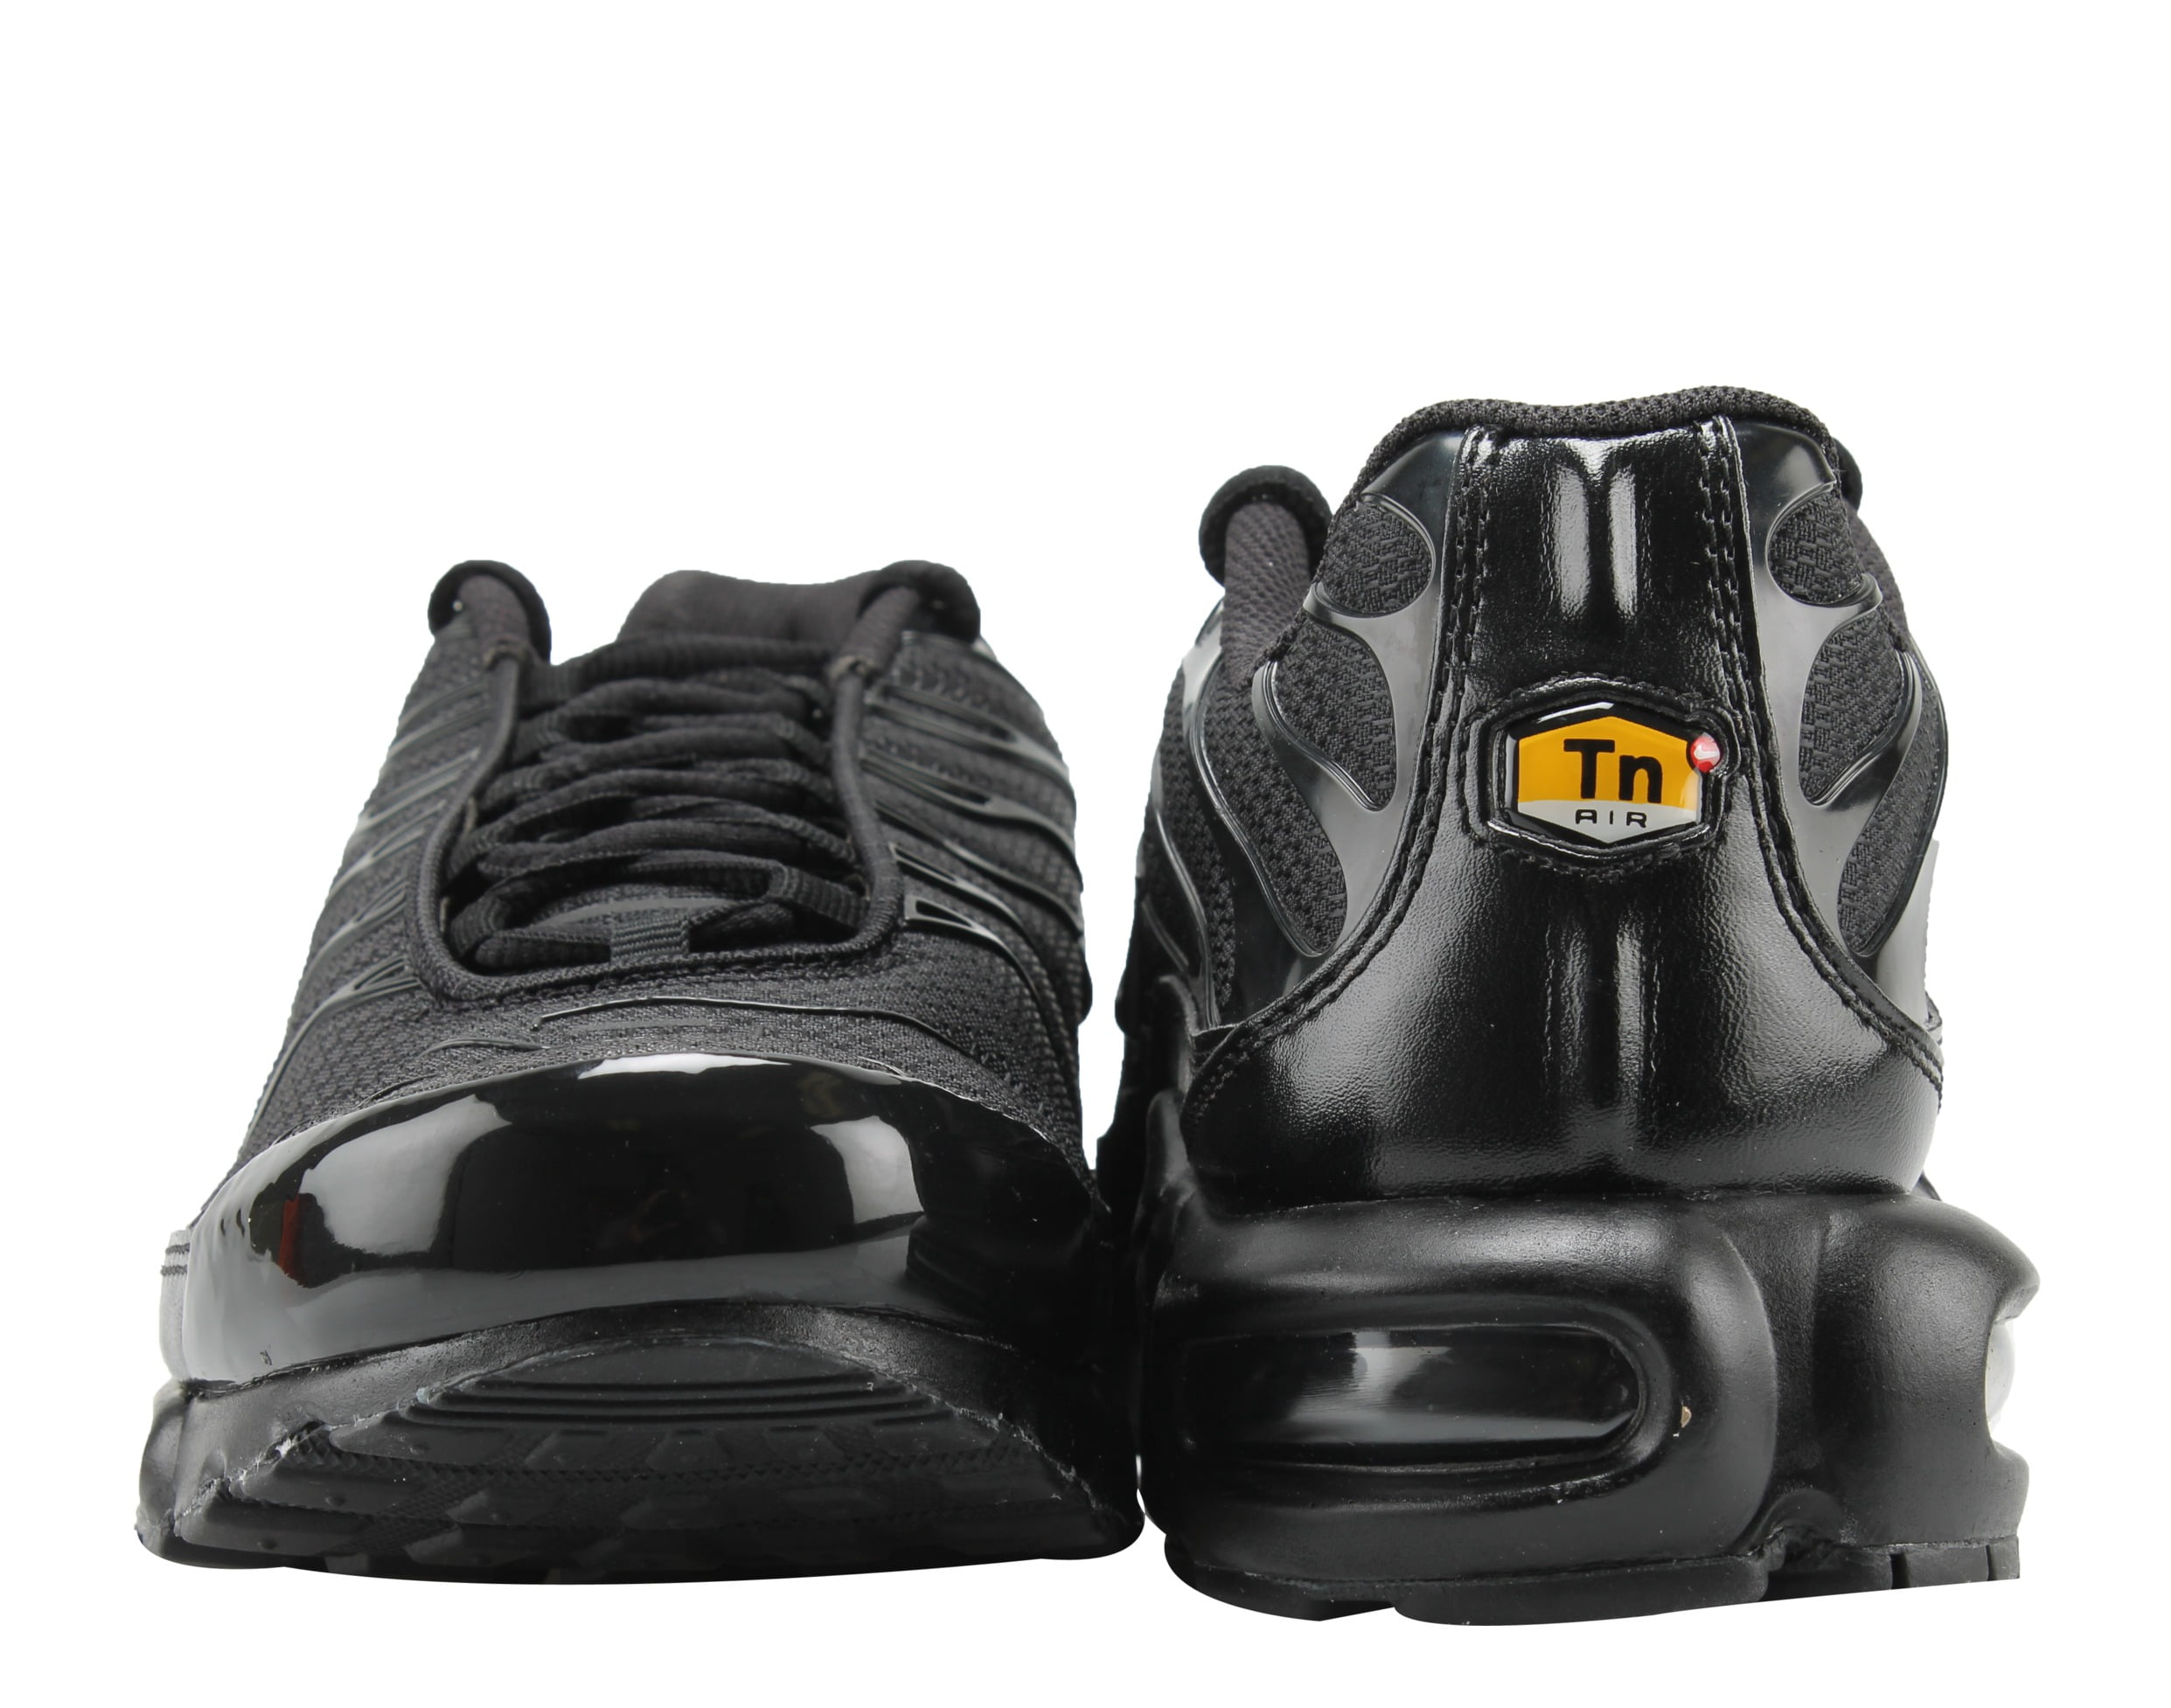 Voorvoegsel eer Mis Nike Men's Air Max Plus Tuned 1 Fabric Trainer Shoes - Walmart.com